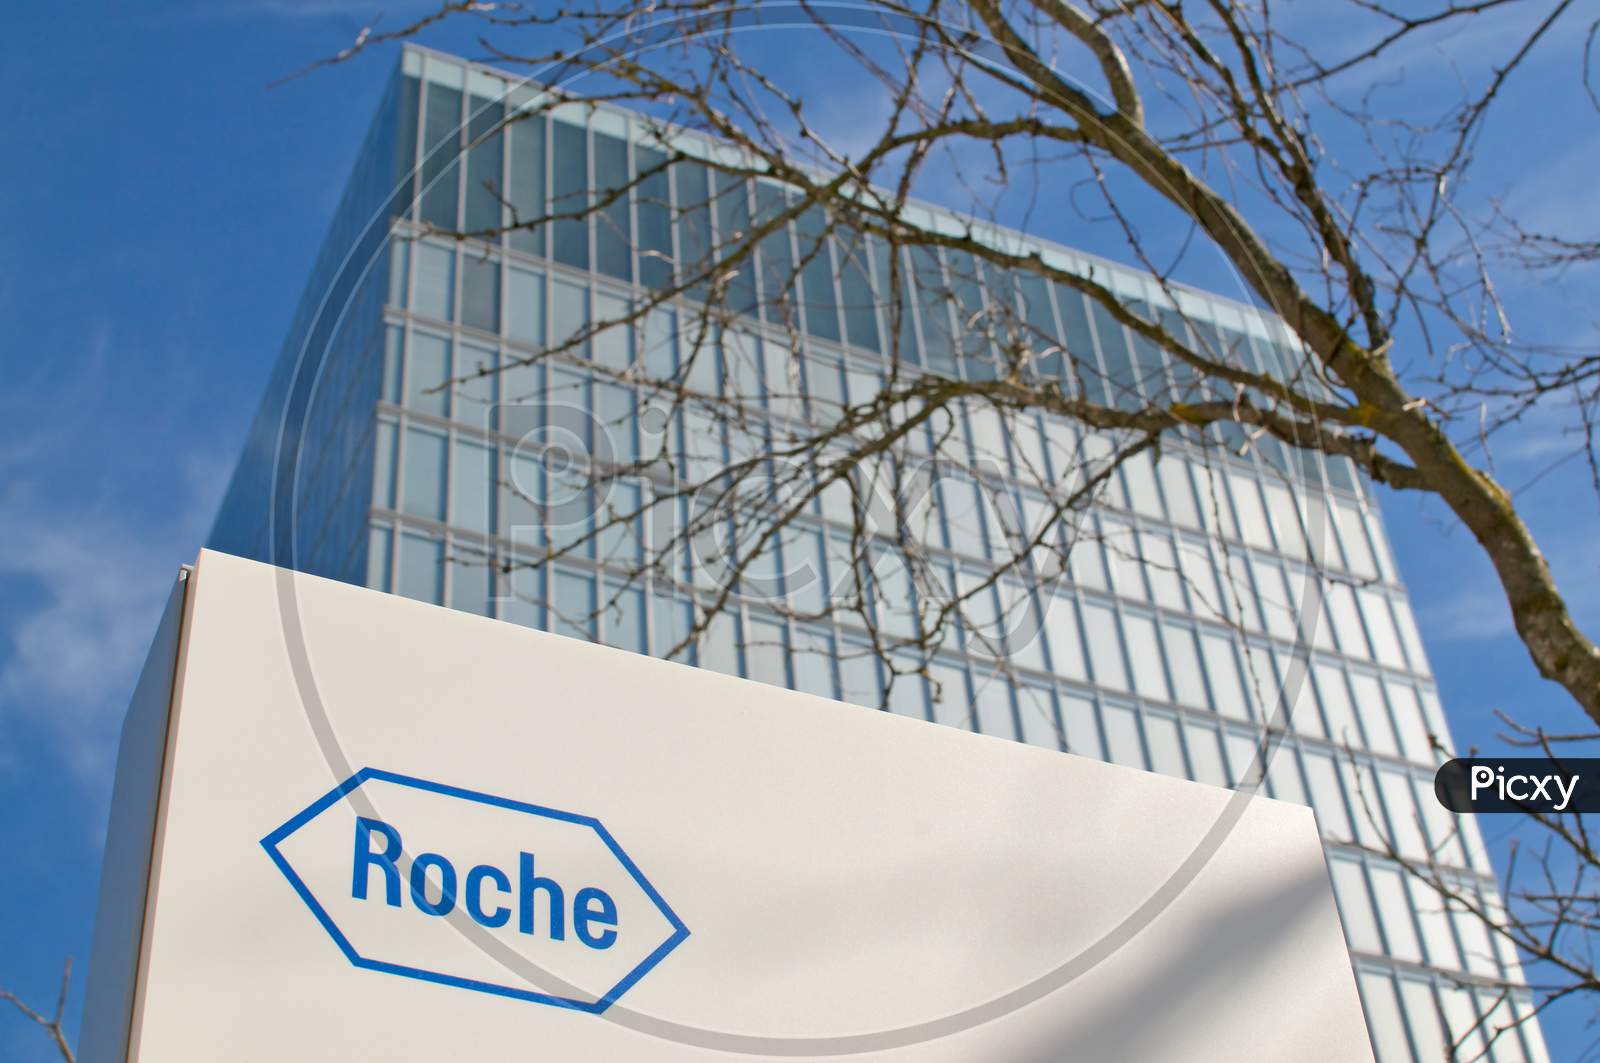 Roche Sign In Front Of The Roche Diagnostics Tower In Rotkreuz, Switzerland